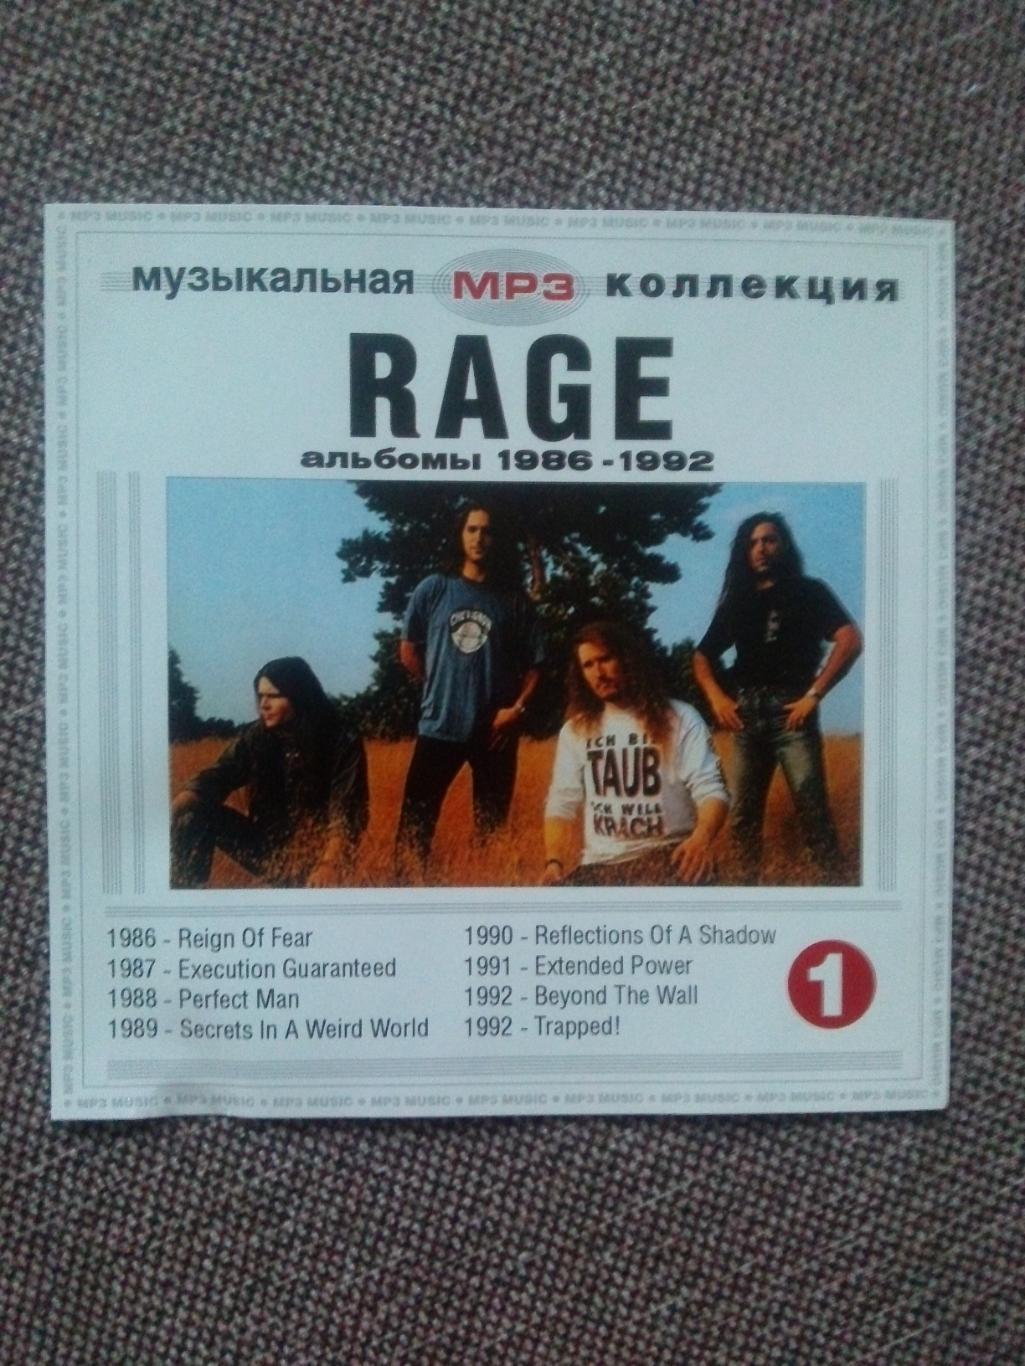 MP - 3 CD диск : группаRage1986 - 1992 гг. (8 альбомов) Thrash metal Рок